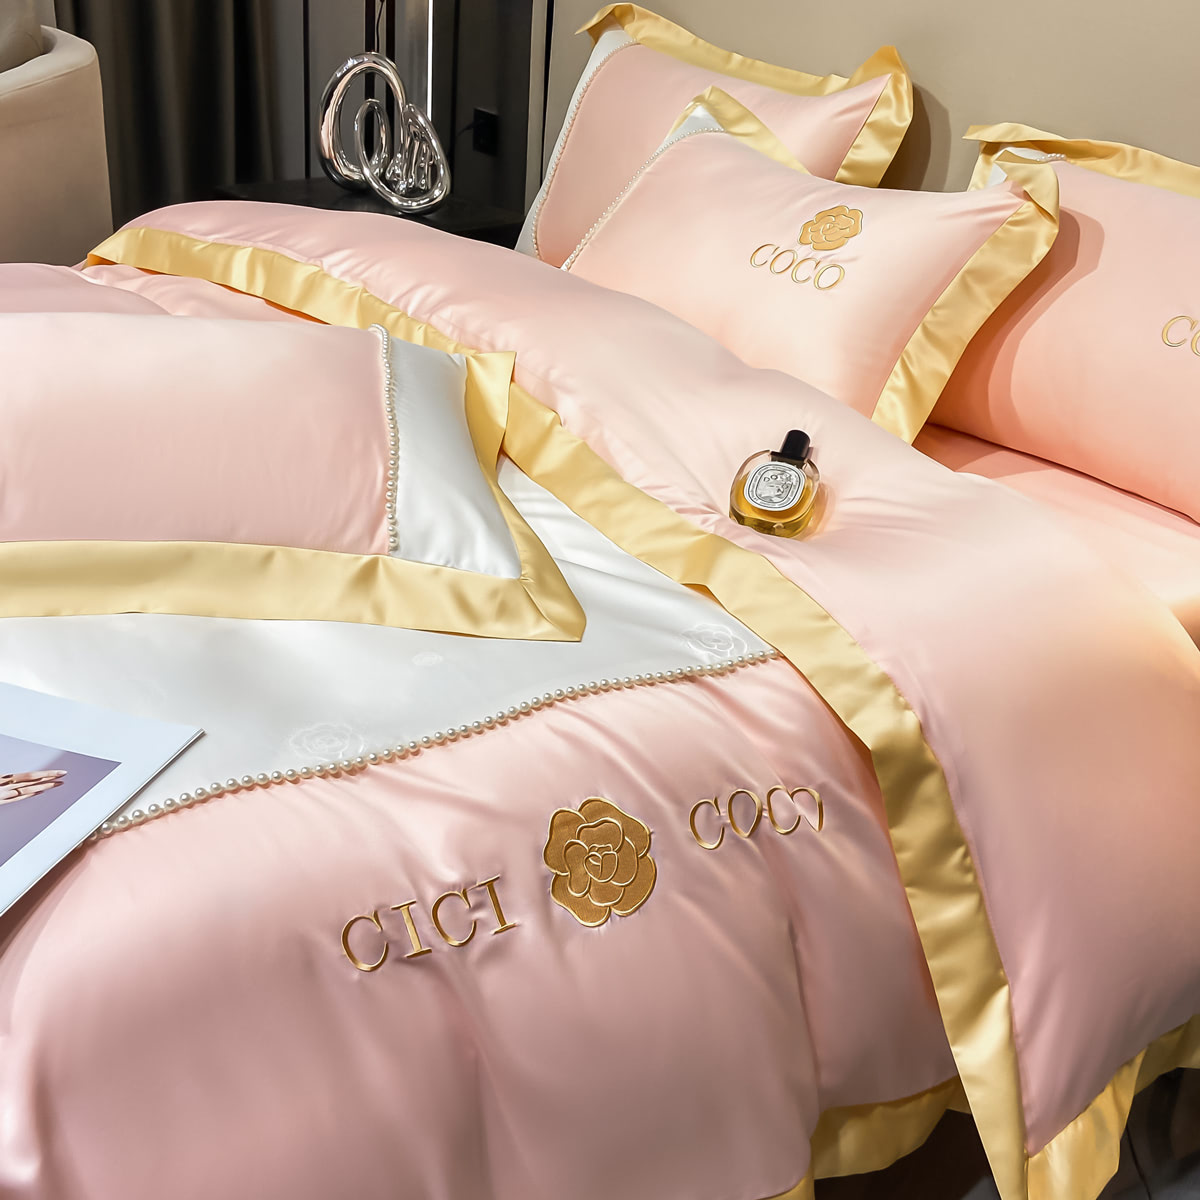 Cozy Silky Satin Flat Bed Sheet Duvet Cover Pillowcases 4 Pcs Set05